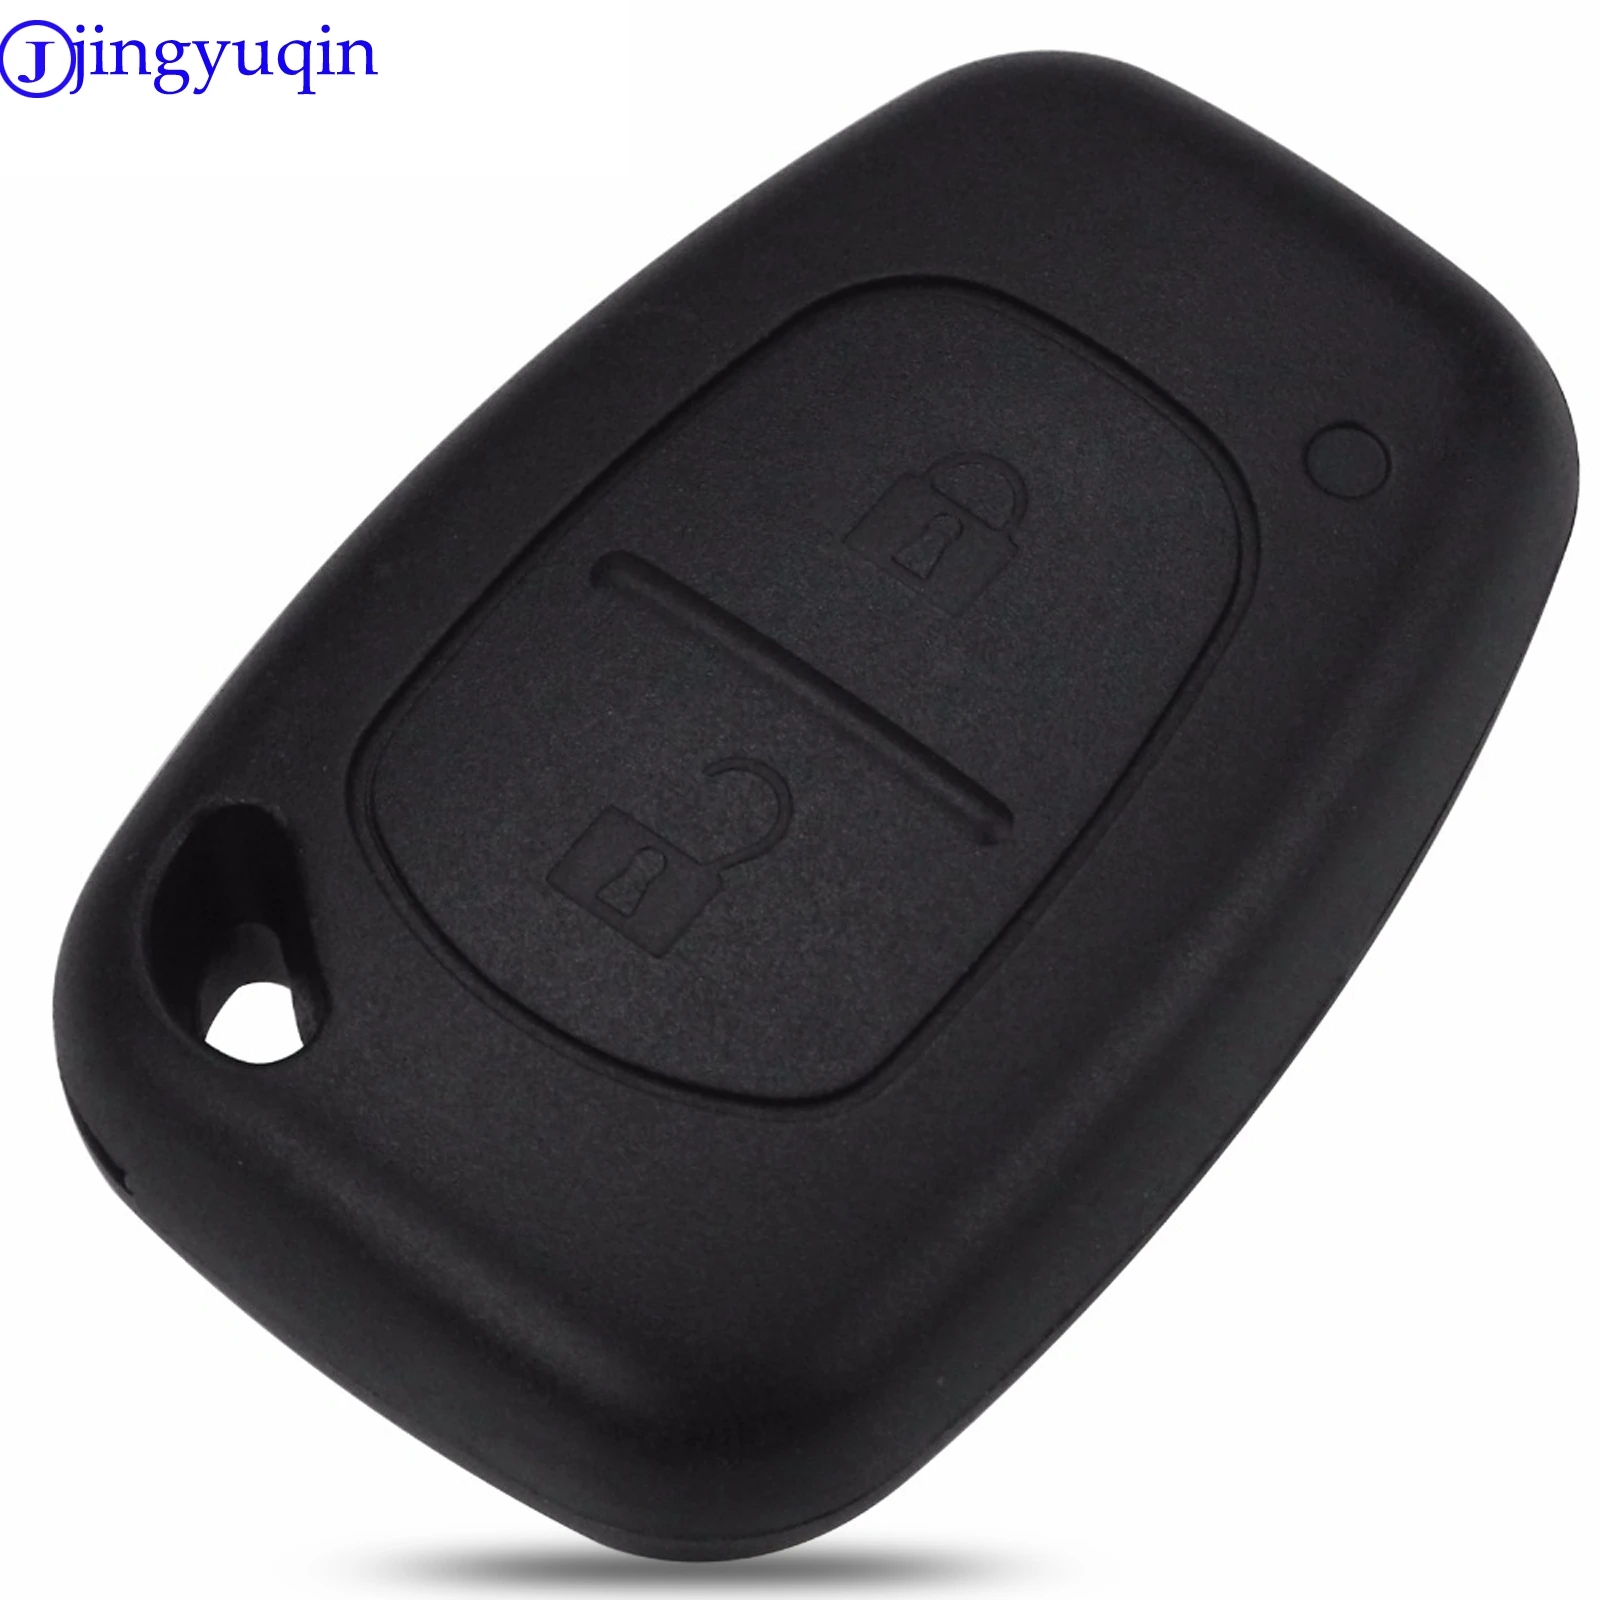 

jingyuqin 2 Button Remote Uncut Blade Car Key Shell For Renault Trafic Vauxhall Opel Vivaro Nissan Primastar Flip Fob Case Cover